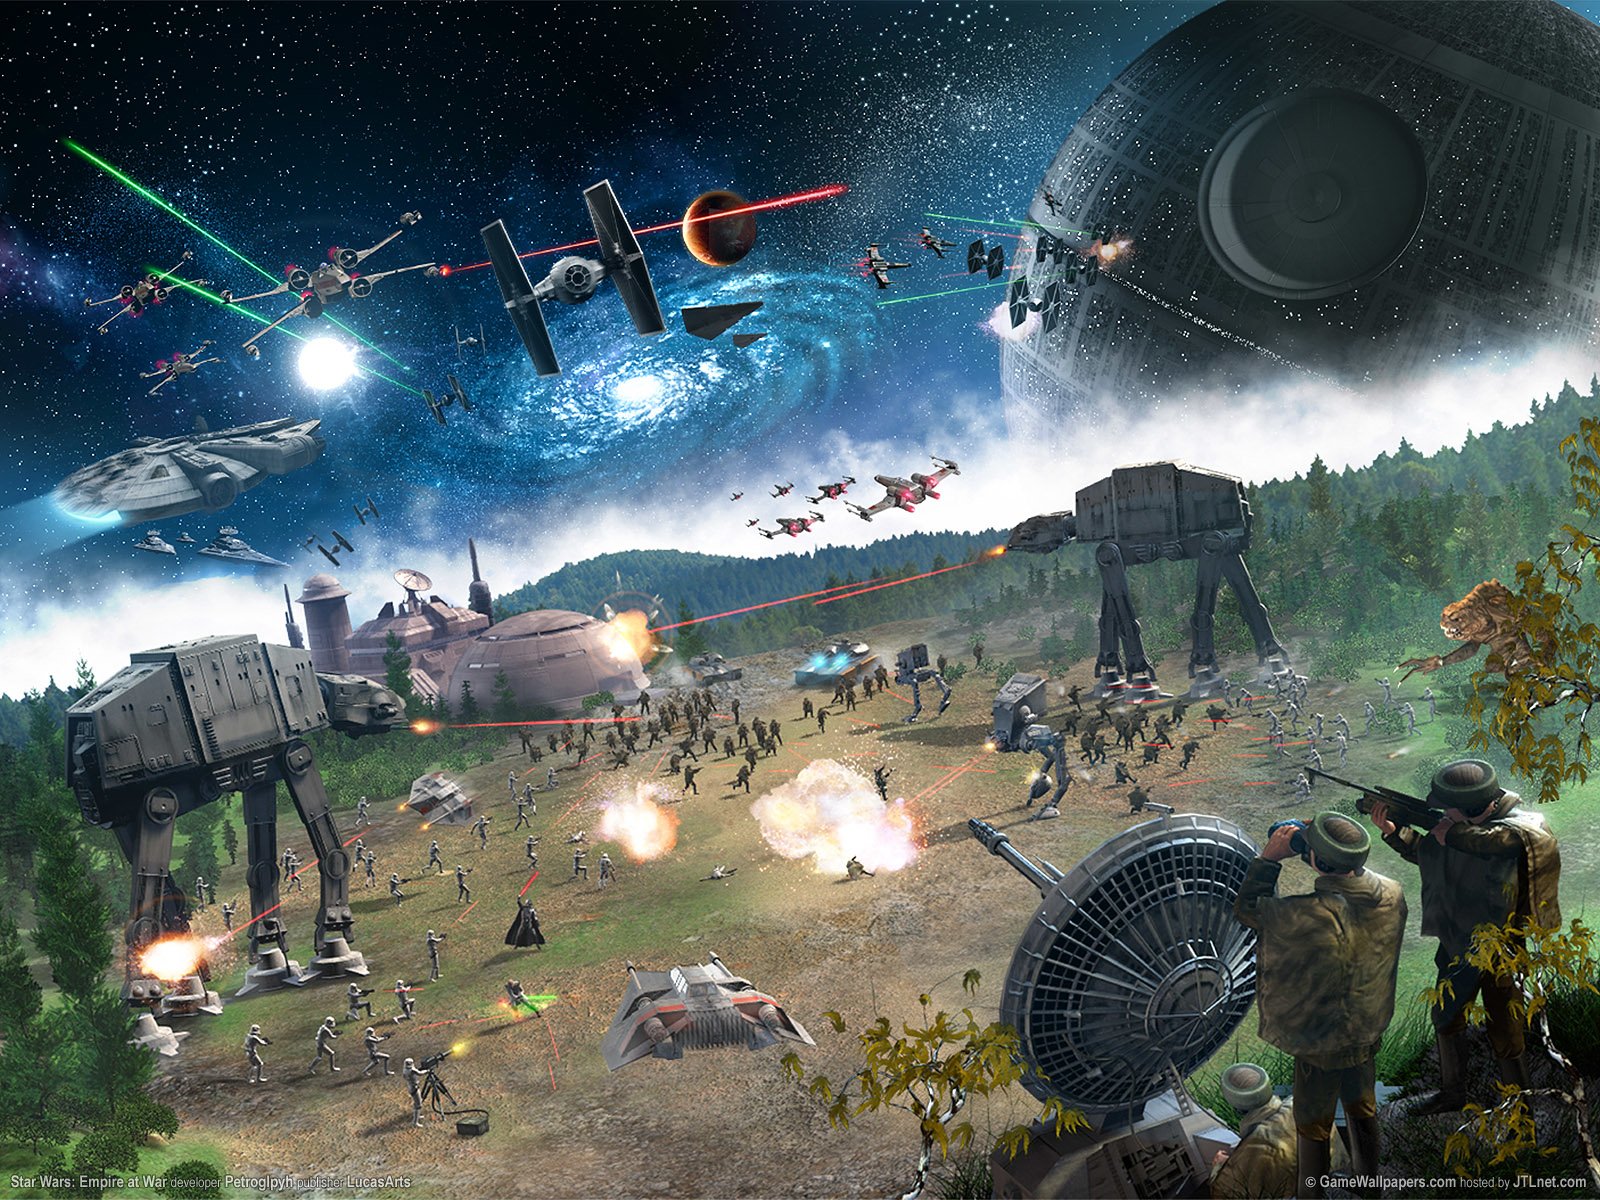 Star Wars Battle Scene Wallpaper And Background Image